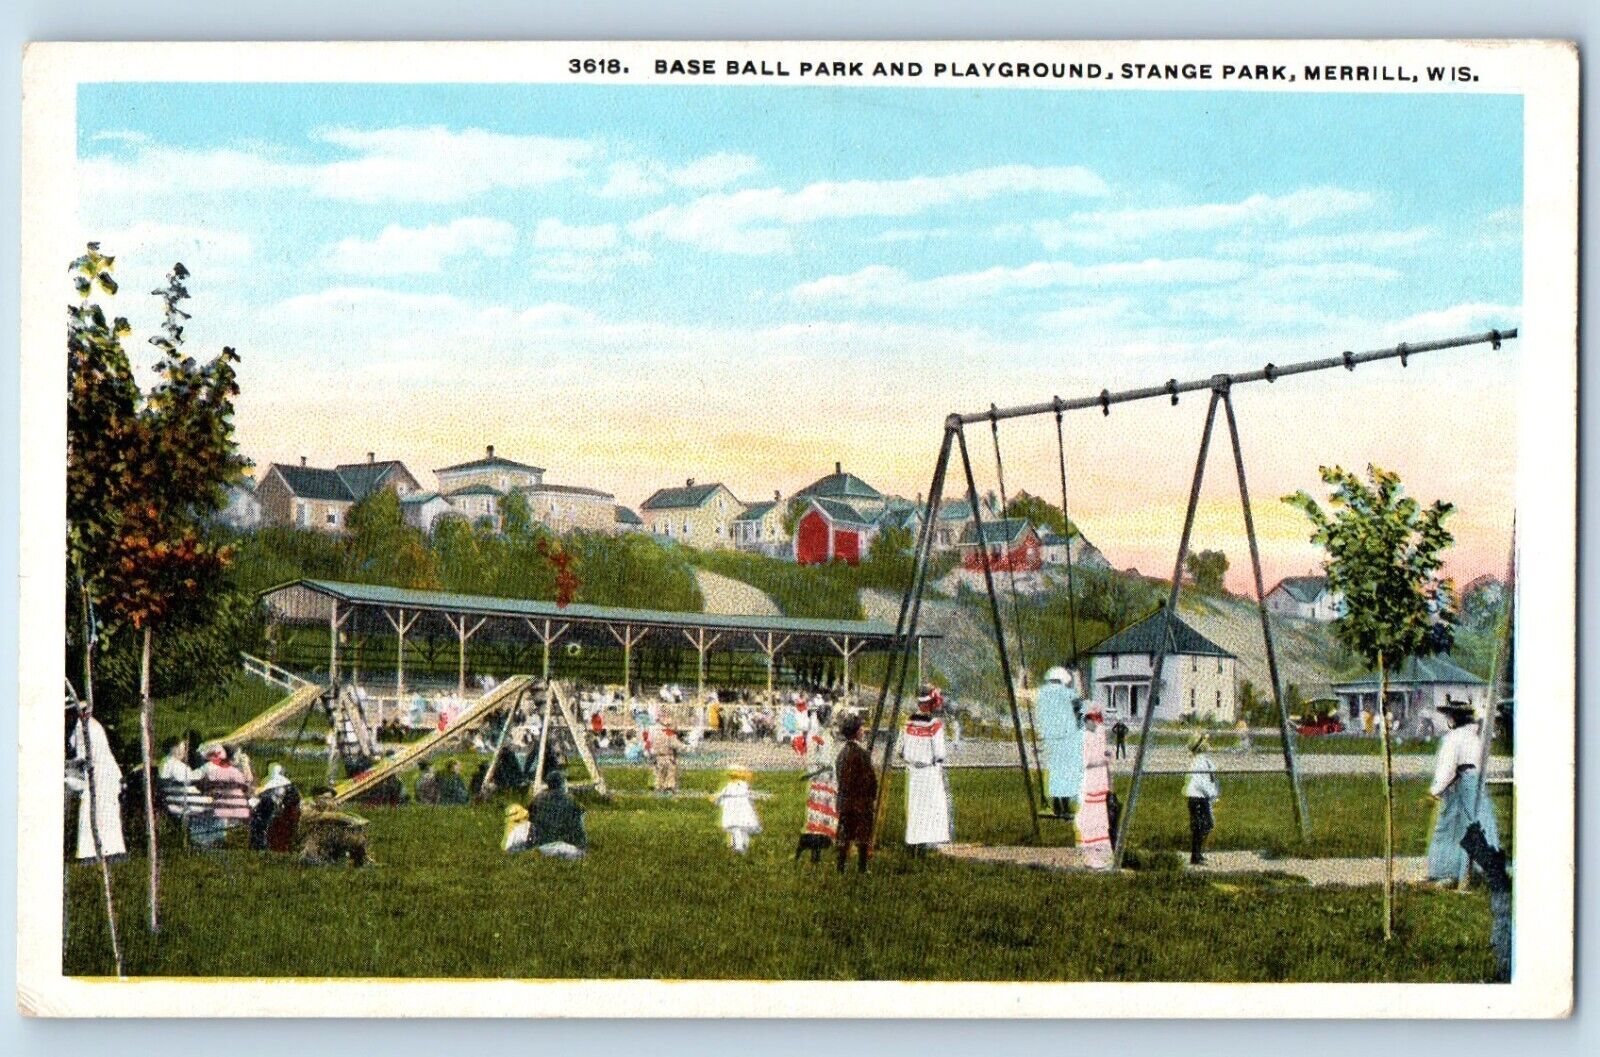 Merrill Wisconsin WI Postcard Baseball Park Playground Stange Park c1940 Vintage